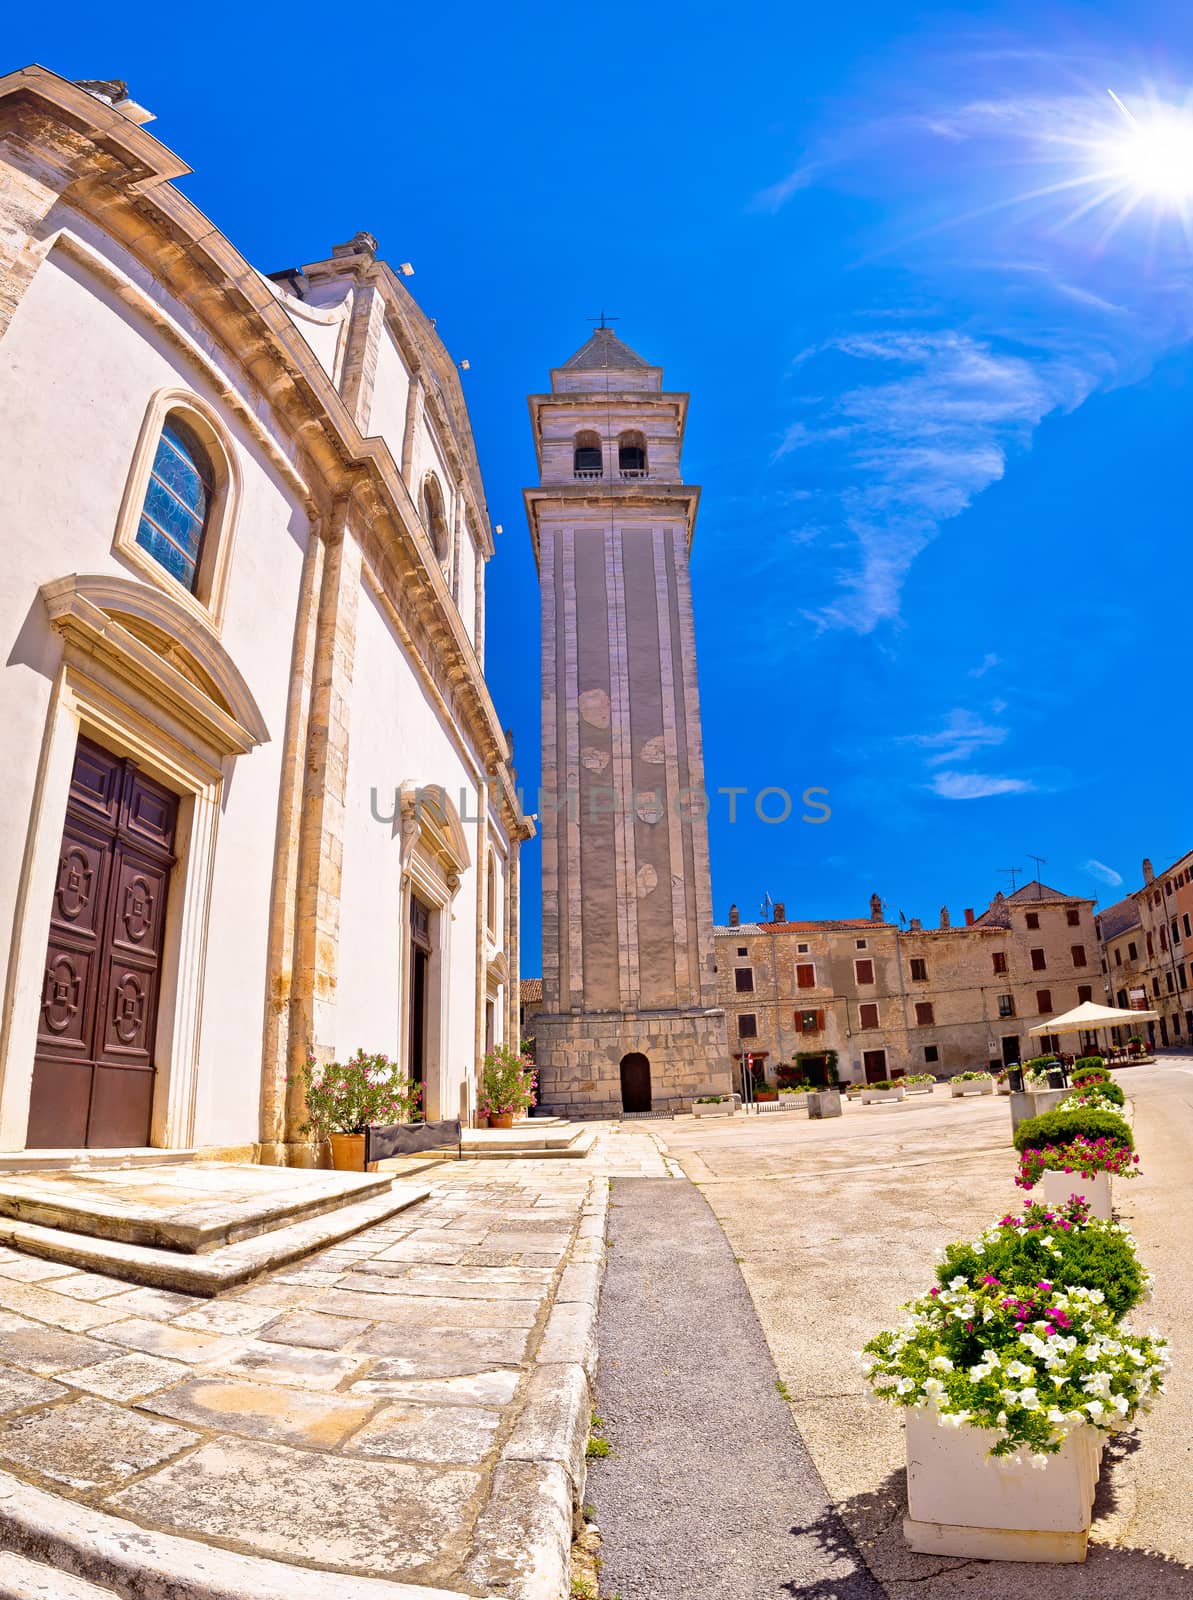 Town of Vodnjan church square view, Istria region of Croatia